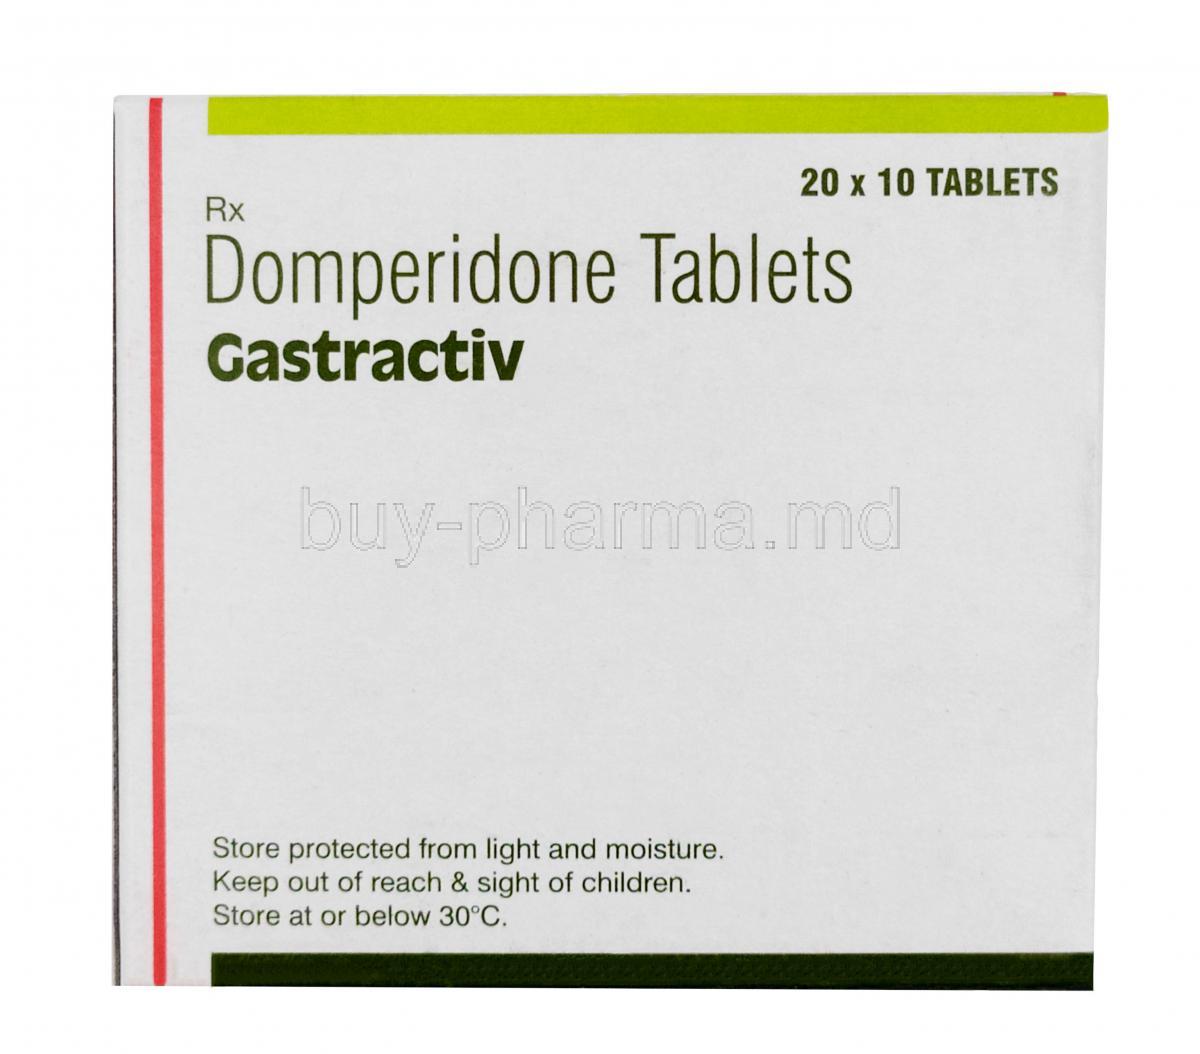 Gastractiv, Domperidone 10 mg,Johnson & Johnson, Box front view